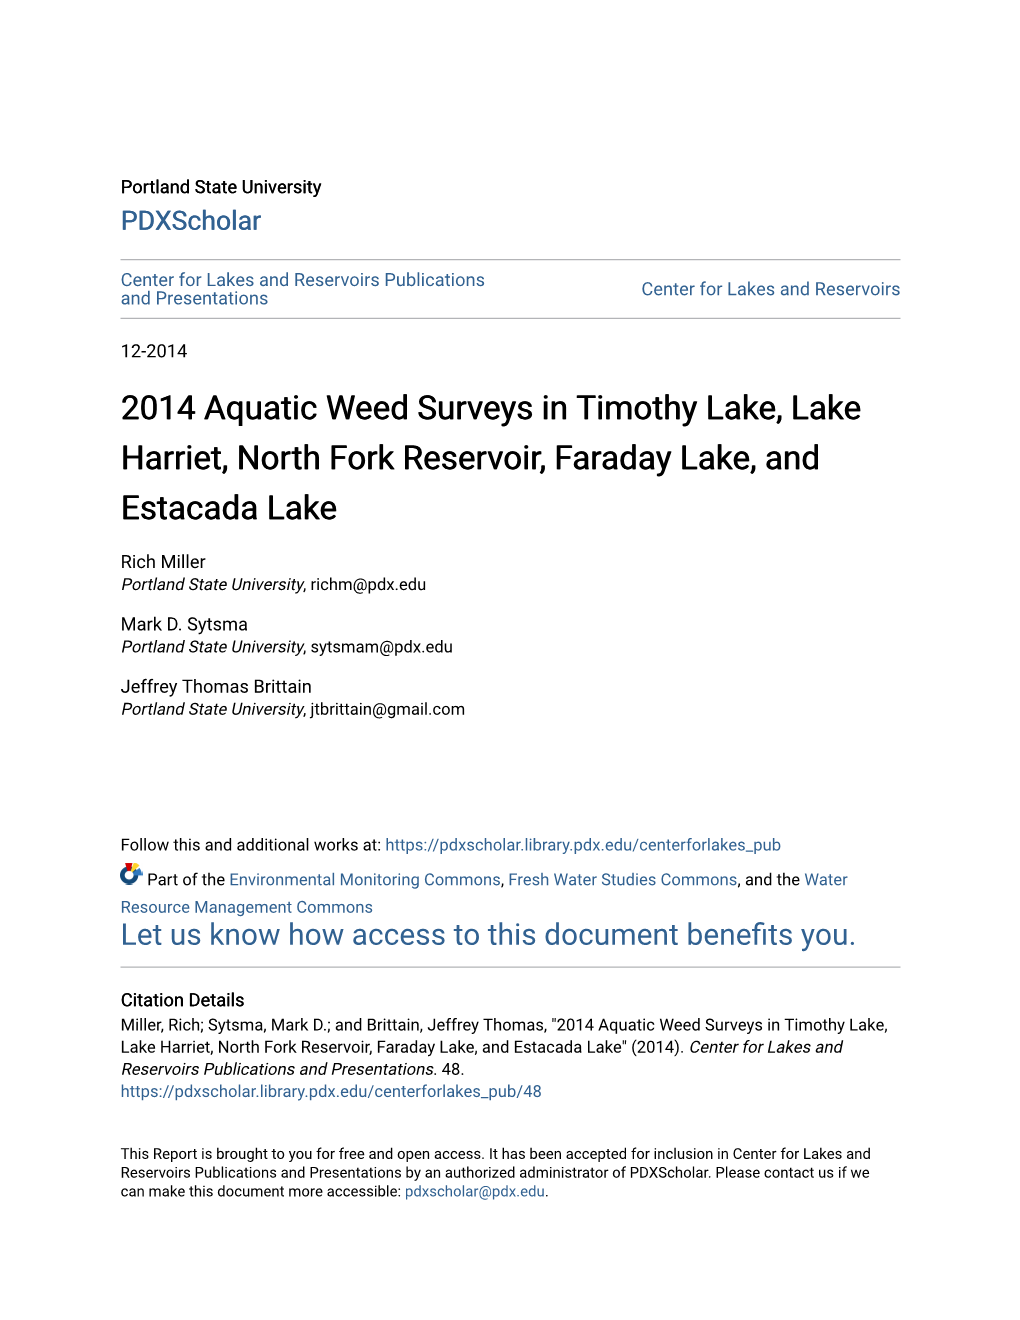 2014 Aquatic Weed Surveys in Timothy Lake, Lake Harriet, North Fork Reservoir, Faraday Lake, and Estacada Lake